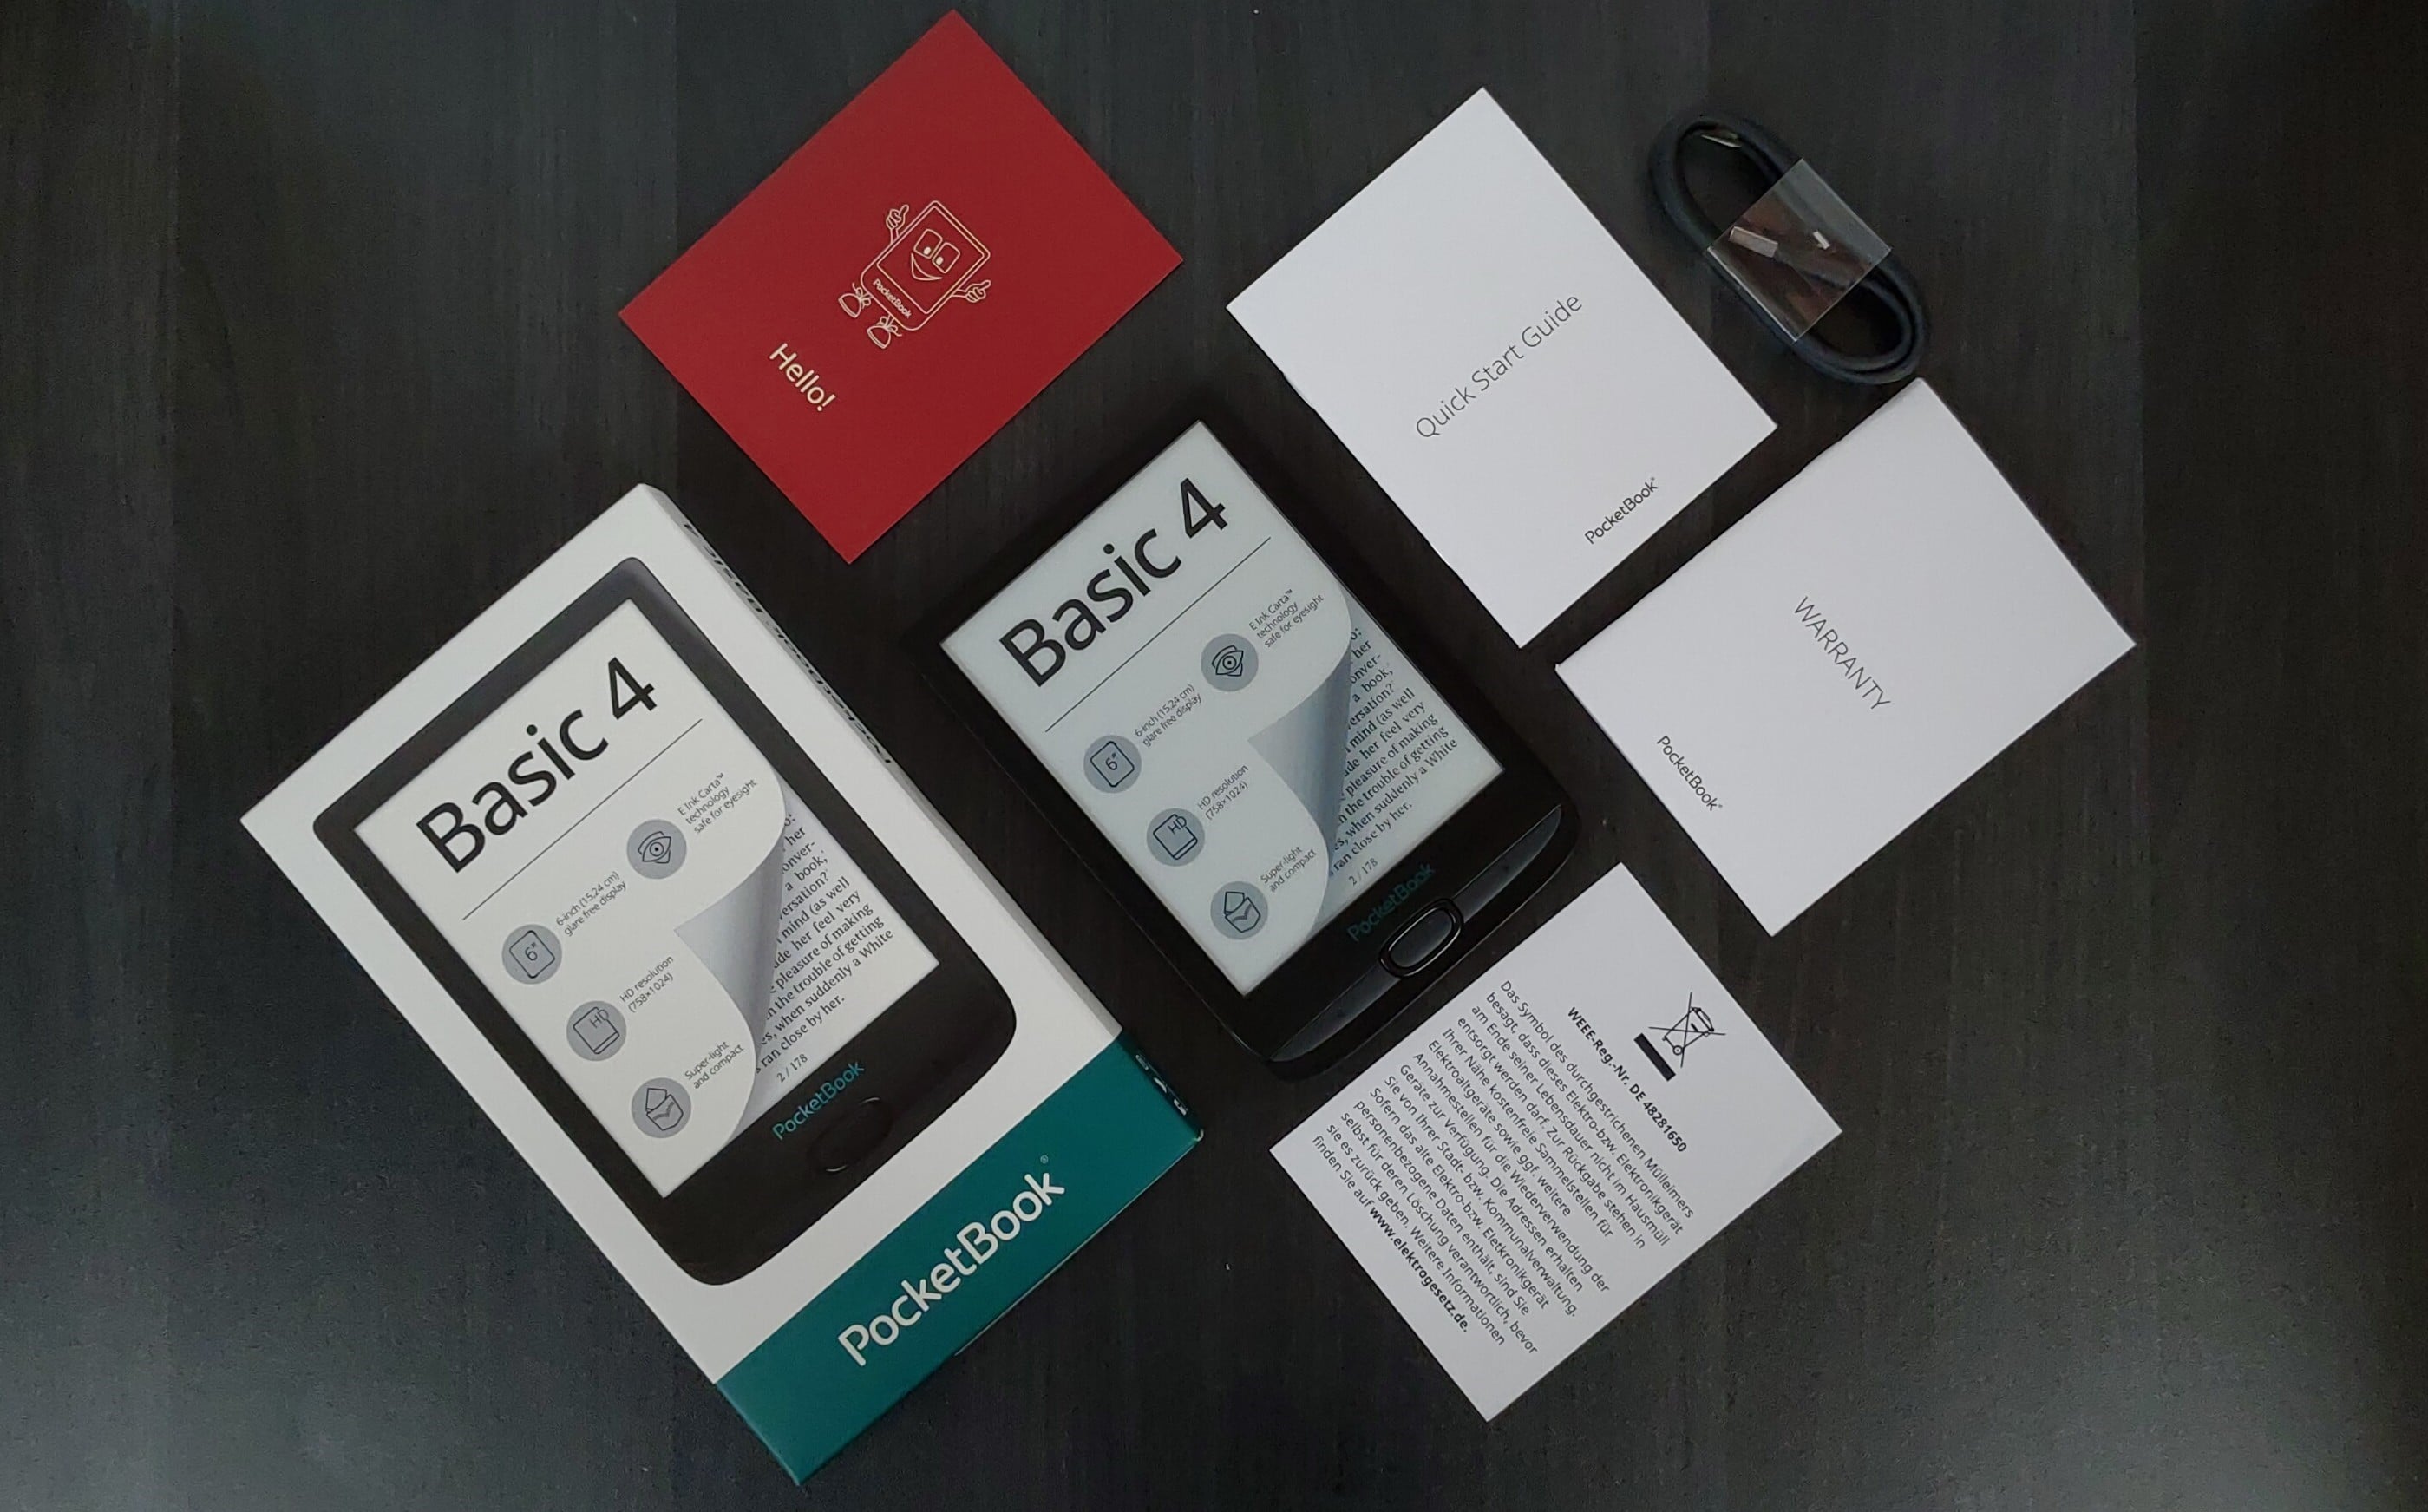 Unboxing the Pocketbook Basic 4 e-reader photo